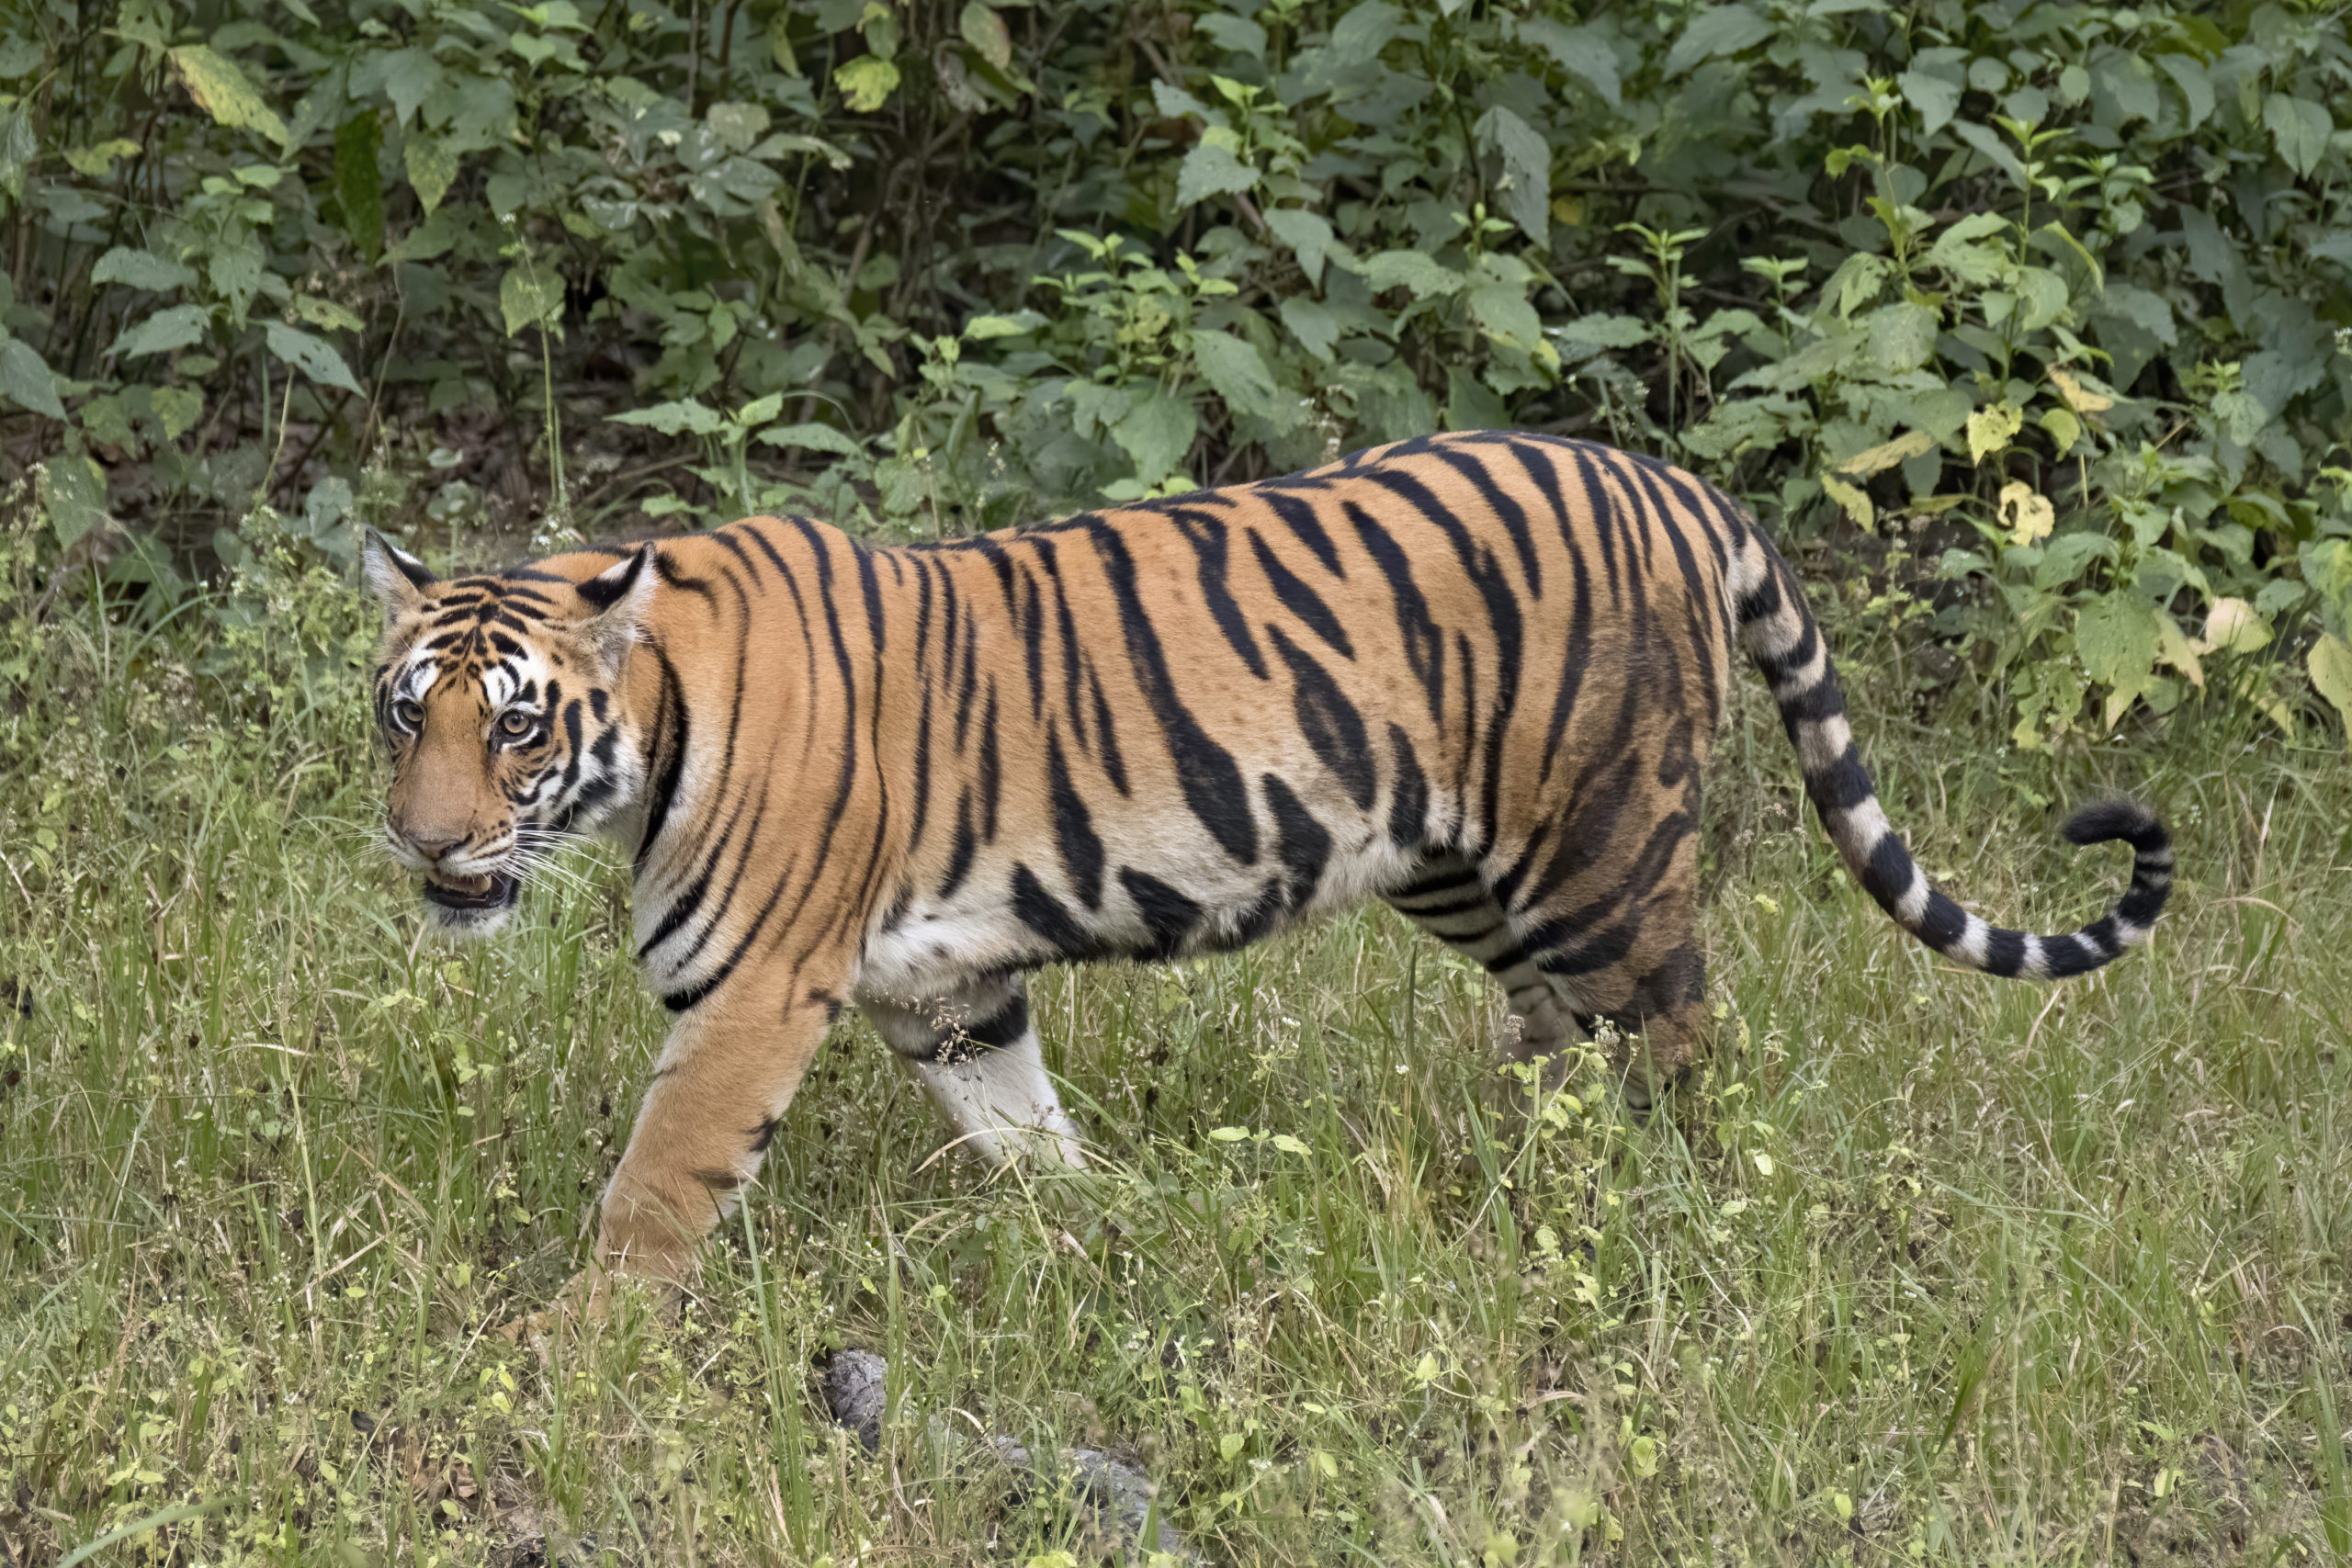 Tiger kills 30-yr-old woman in Banke